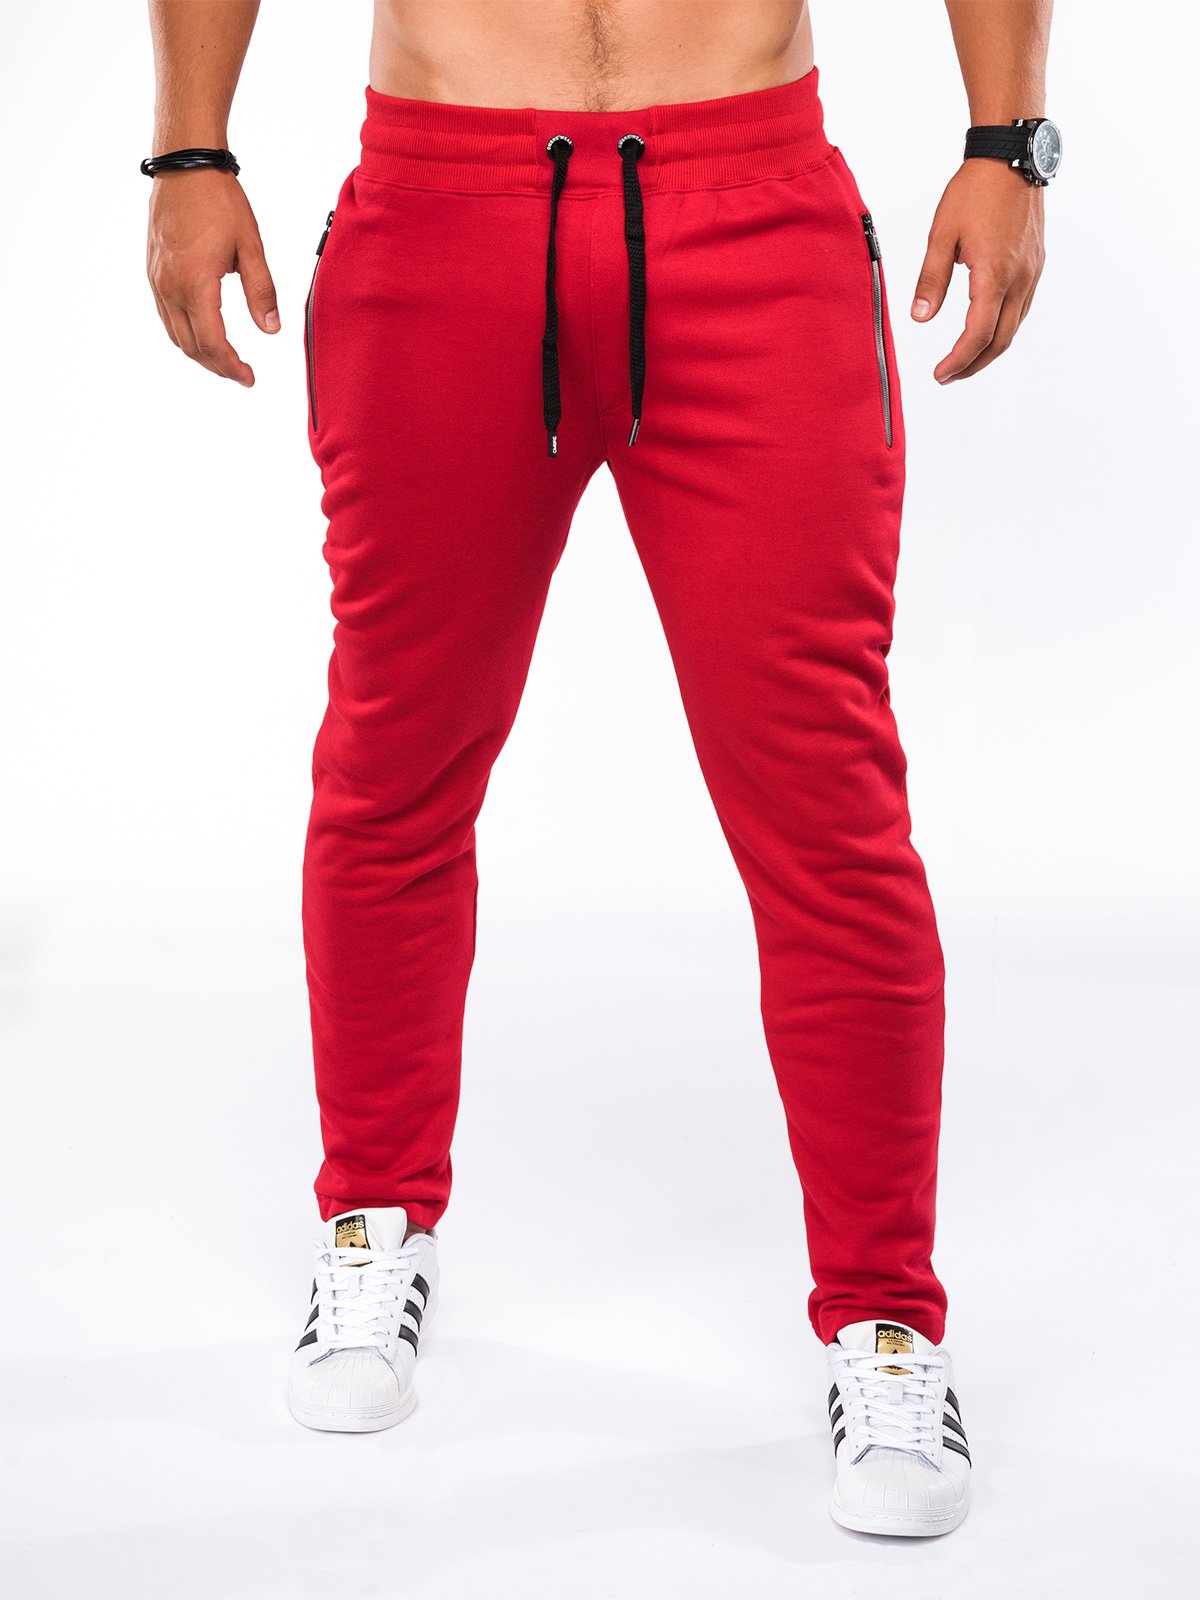 Men's sweatpants P549 - red | MODONE wholesale - Clothing For Men